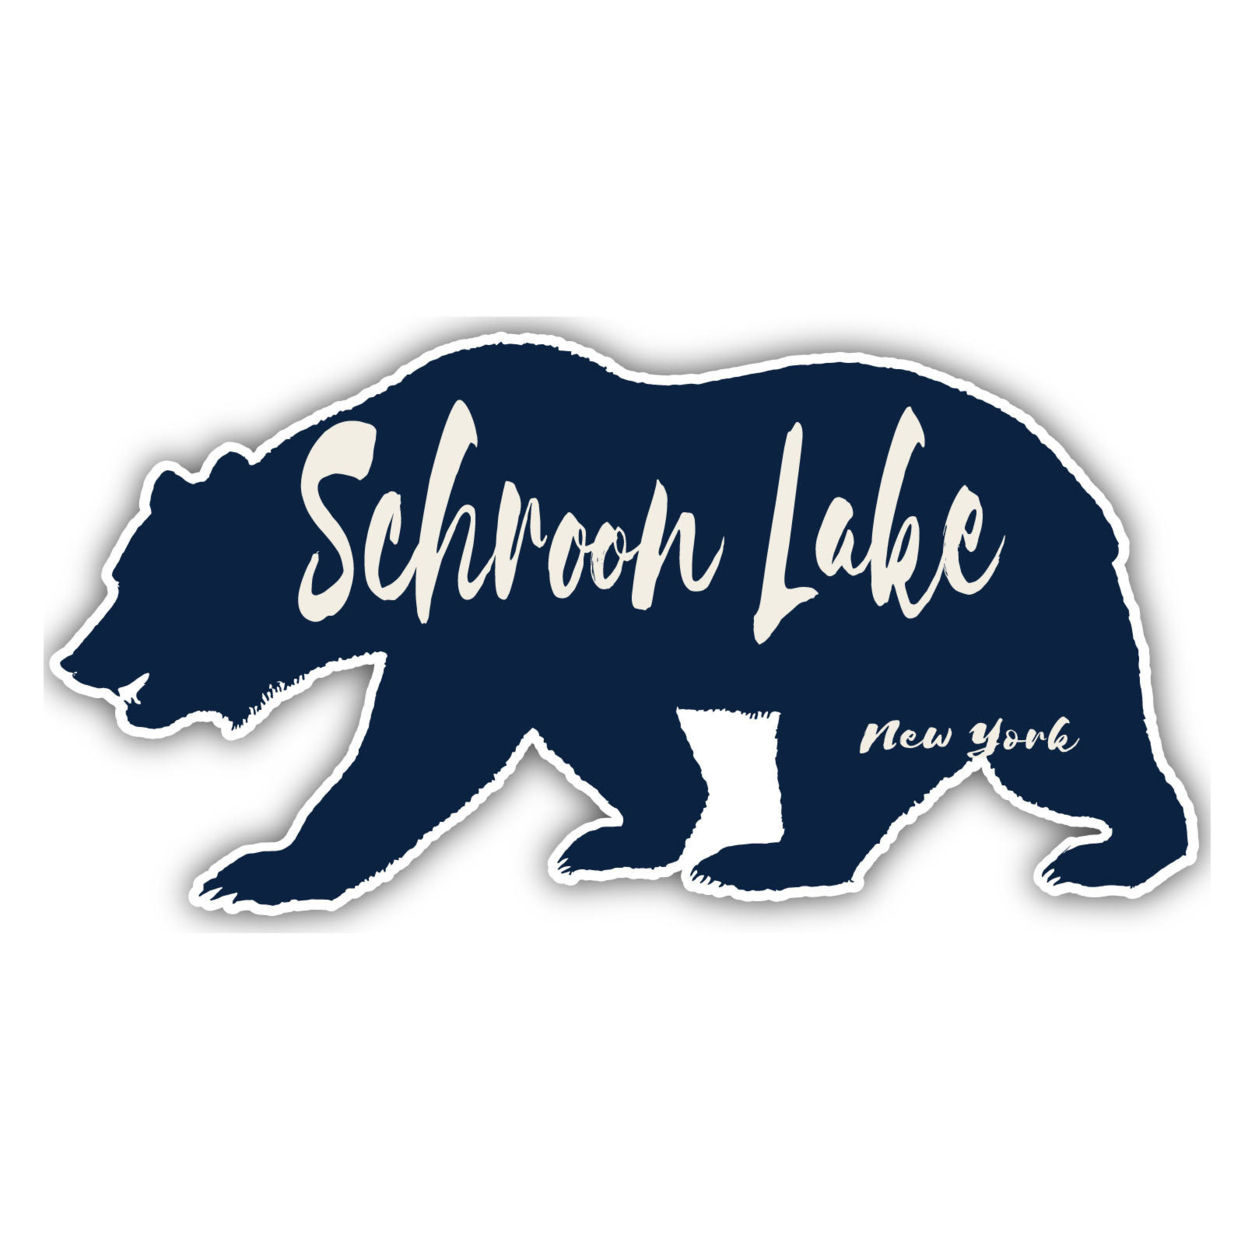 Schroon Lake New York Souvenir Decorative Stickers (Choose Theme And Size) - Single Unit, 2-Inch, Bear